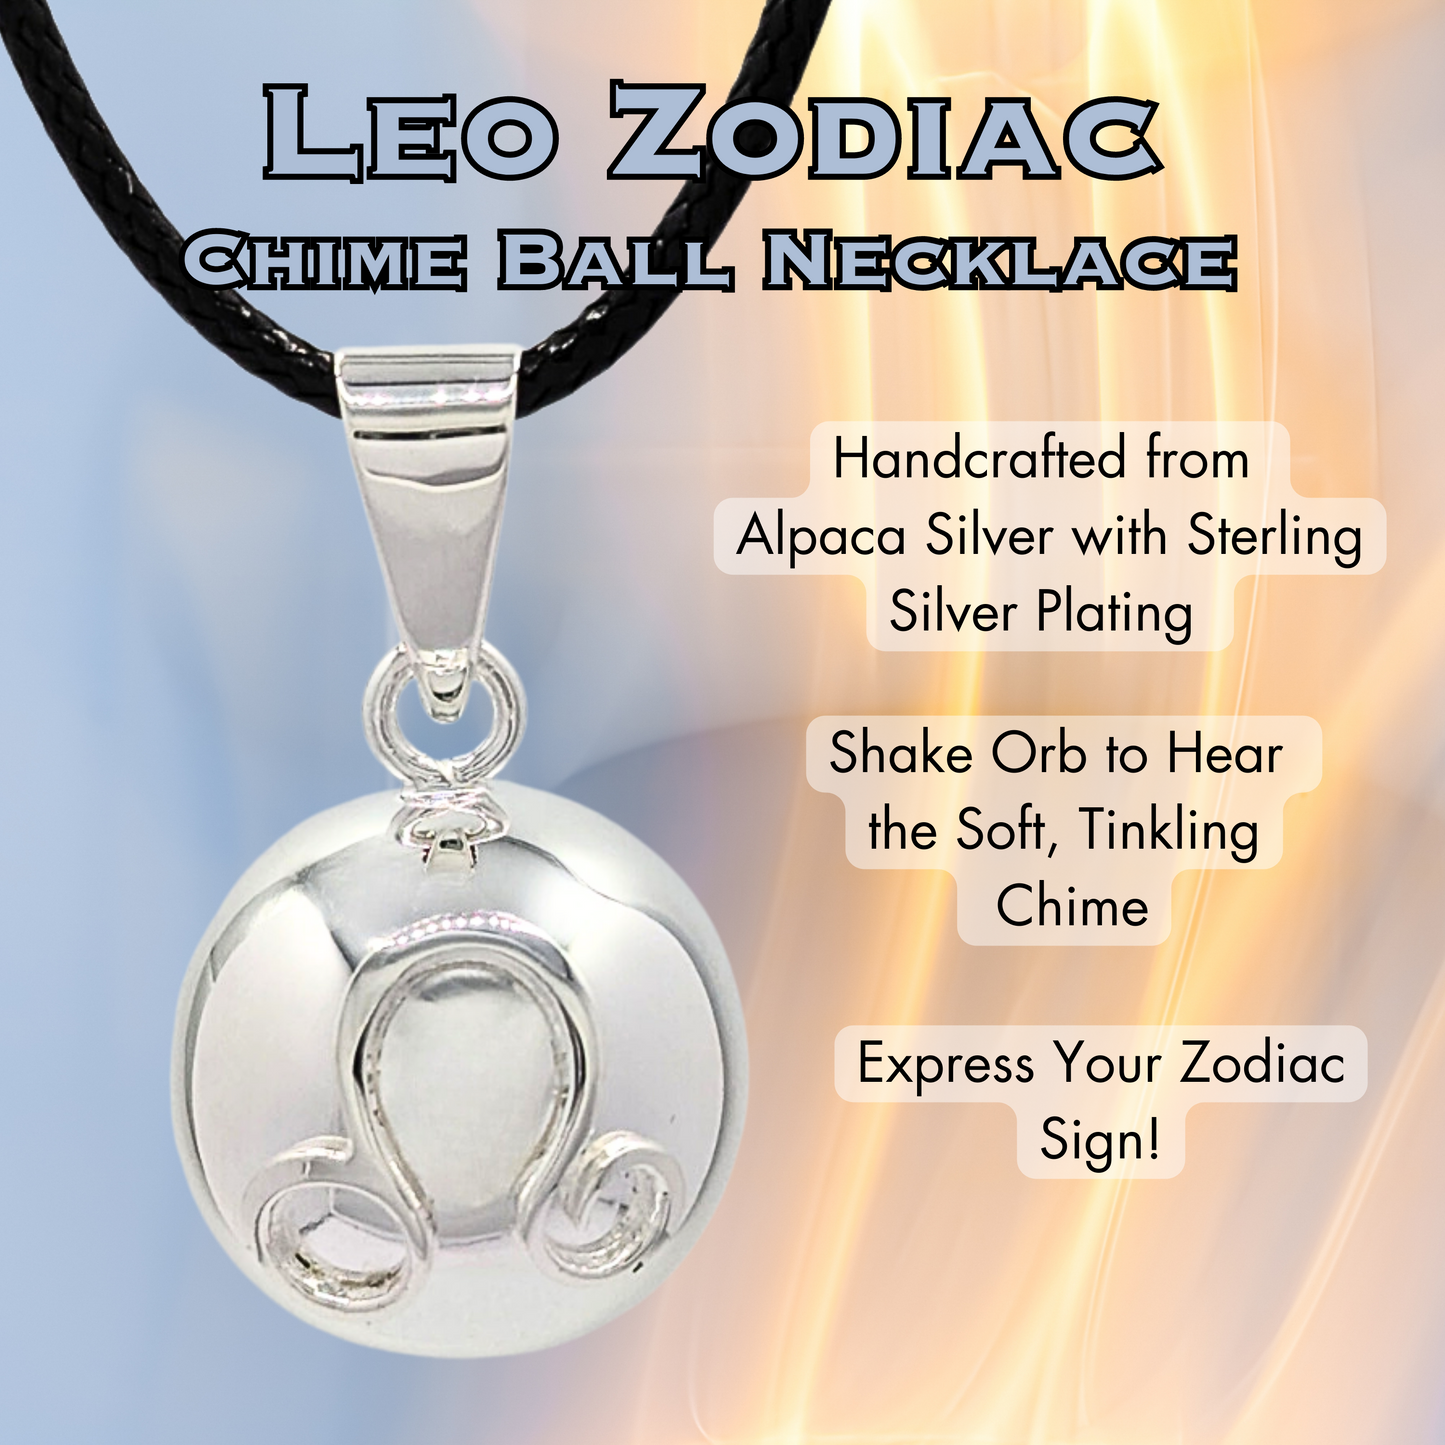 Leo Zodiac Chime Necklace Aquarius Zodiac Chime Necklace - FINAL SALE- 35% OFF